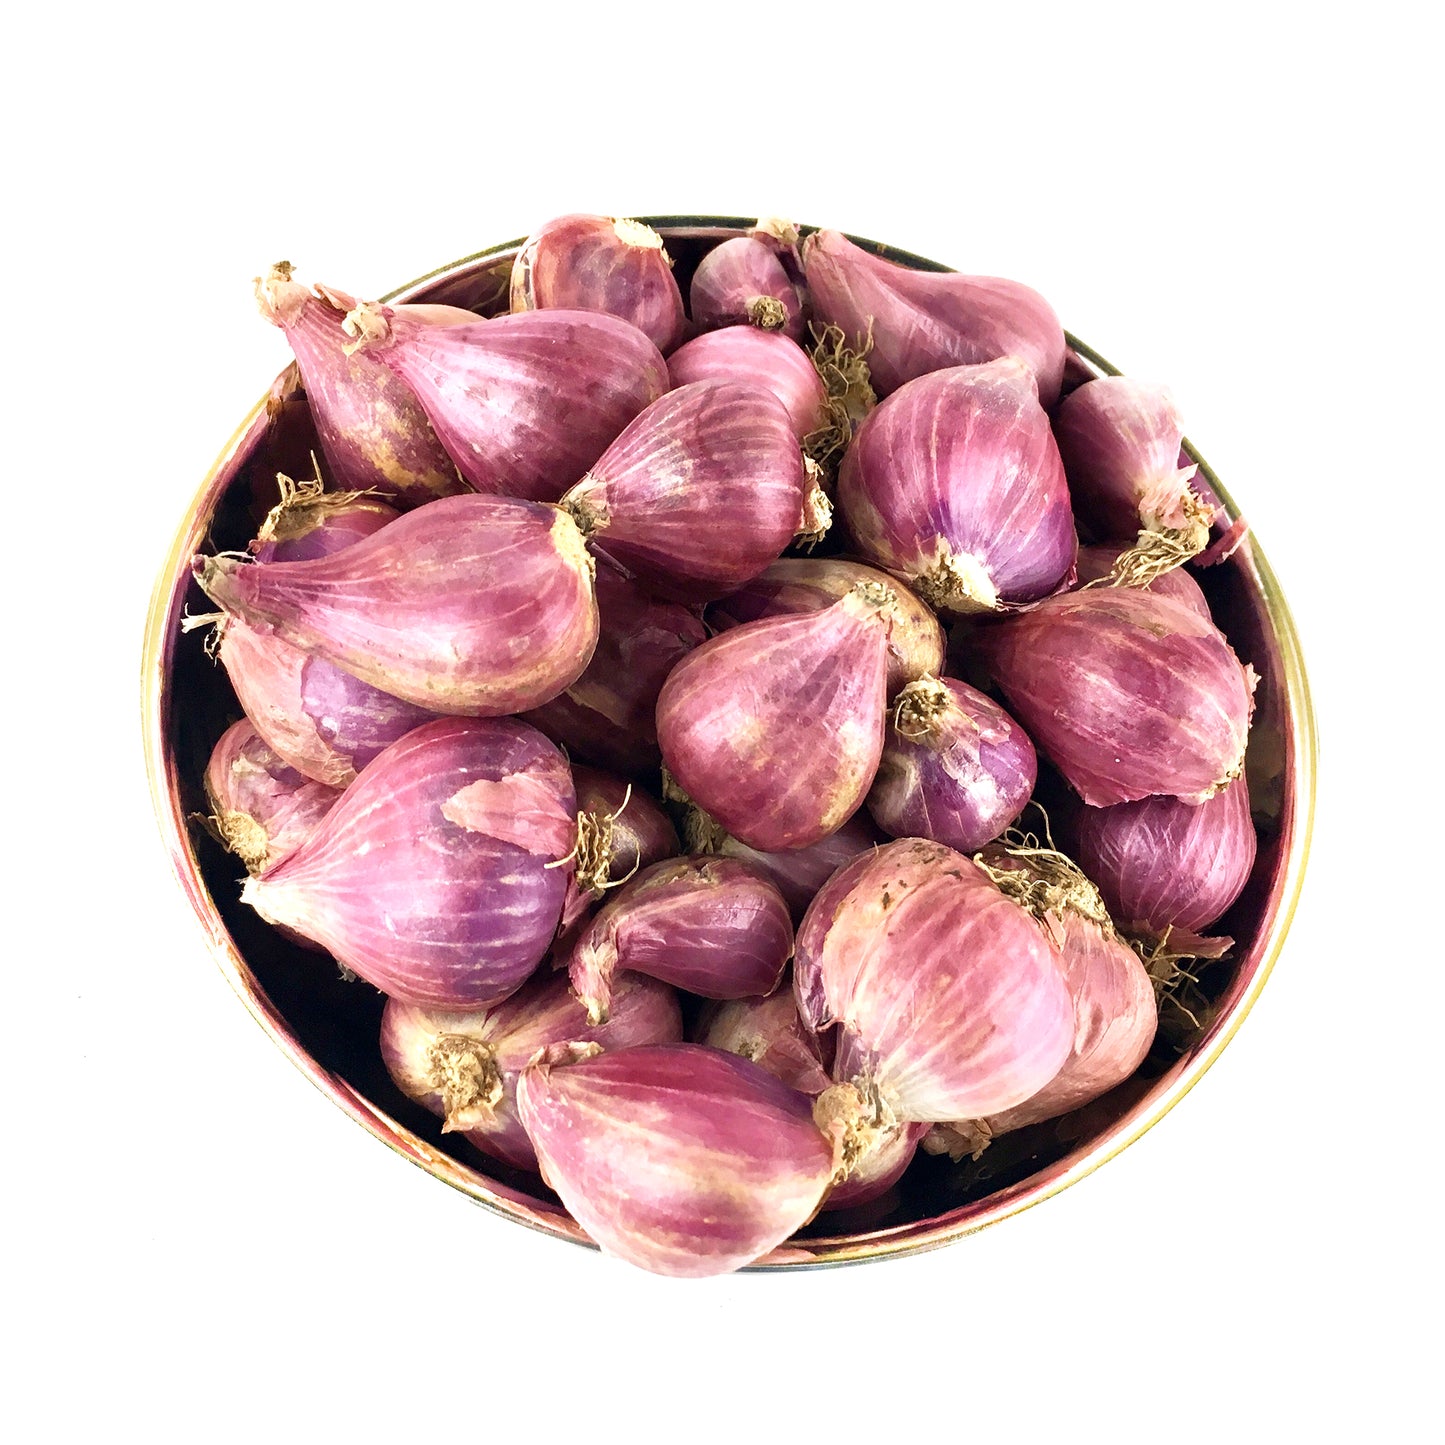 Sambar onion (Shallots) 500g